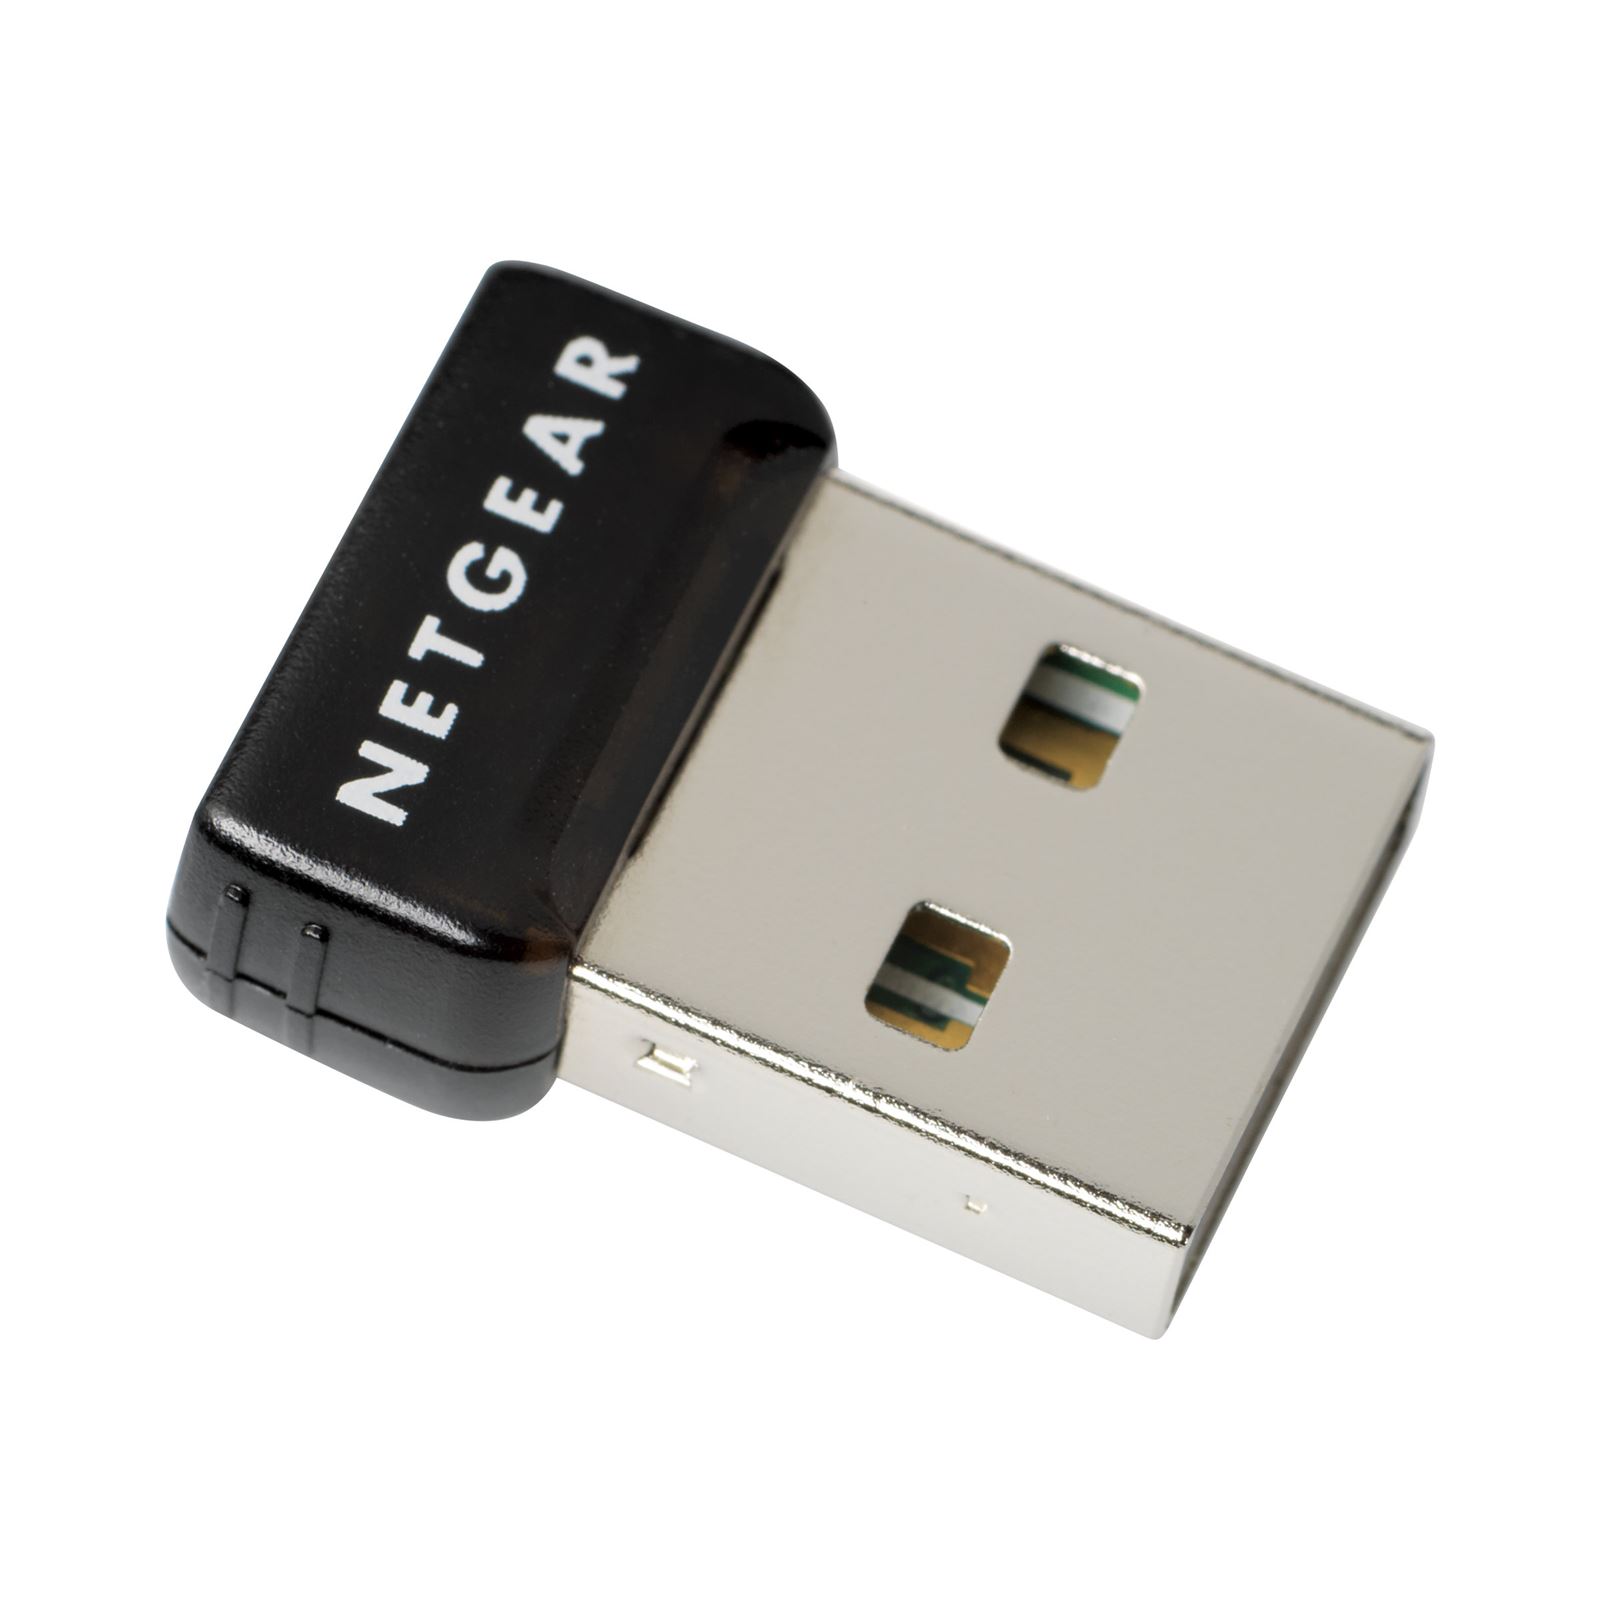 N150 WIRELESS USB MICRO ADAPTER